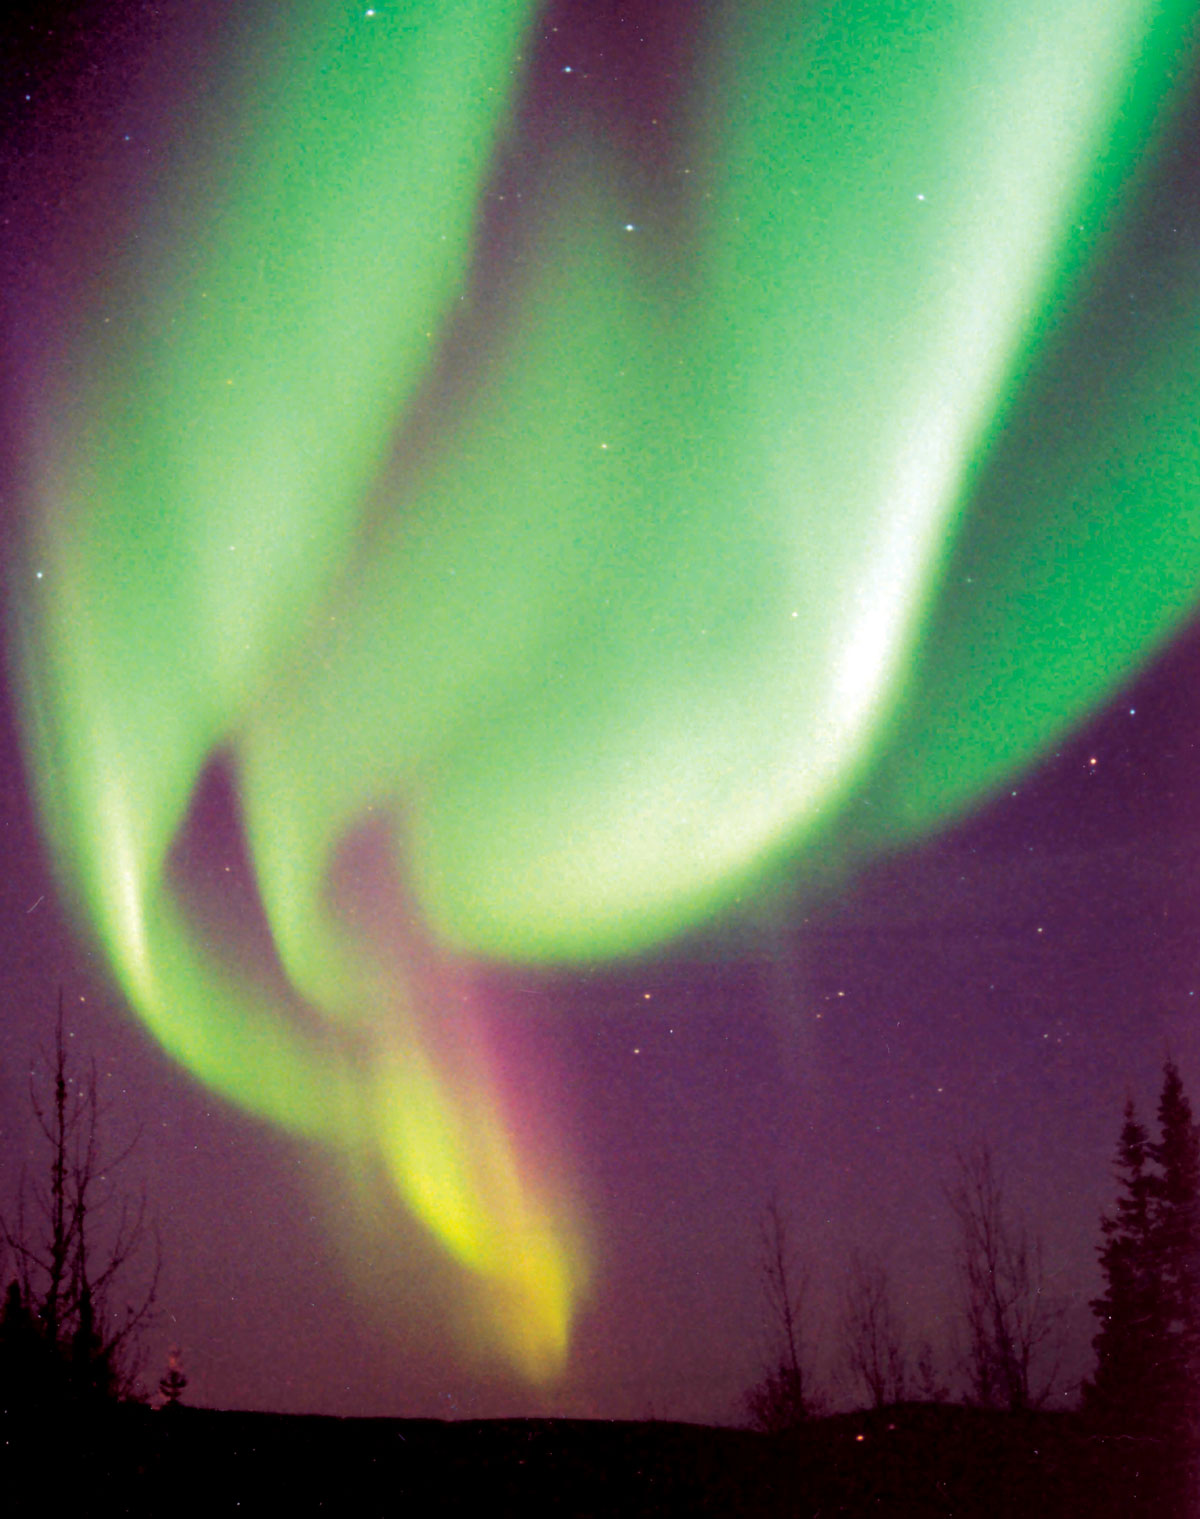 A photograph of aurora borealis taken in Fairbanks, Alaska.